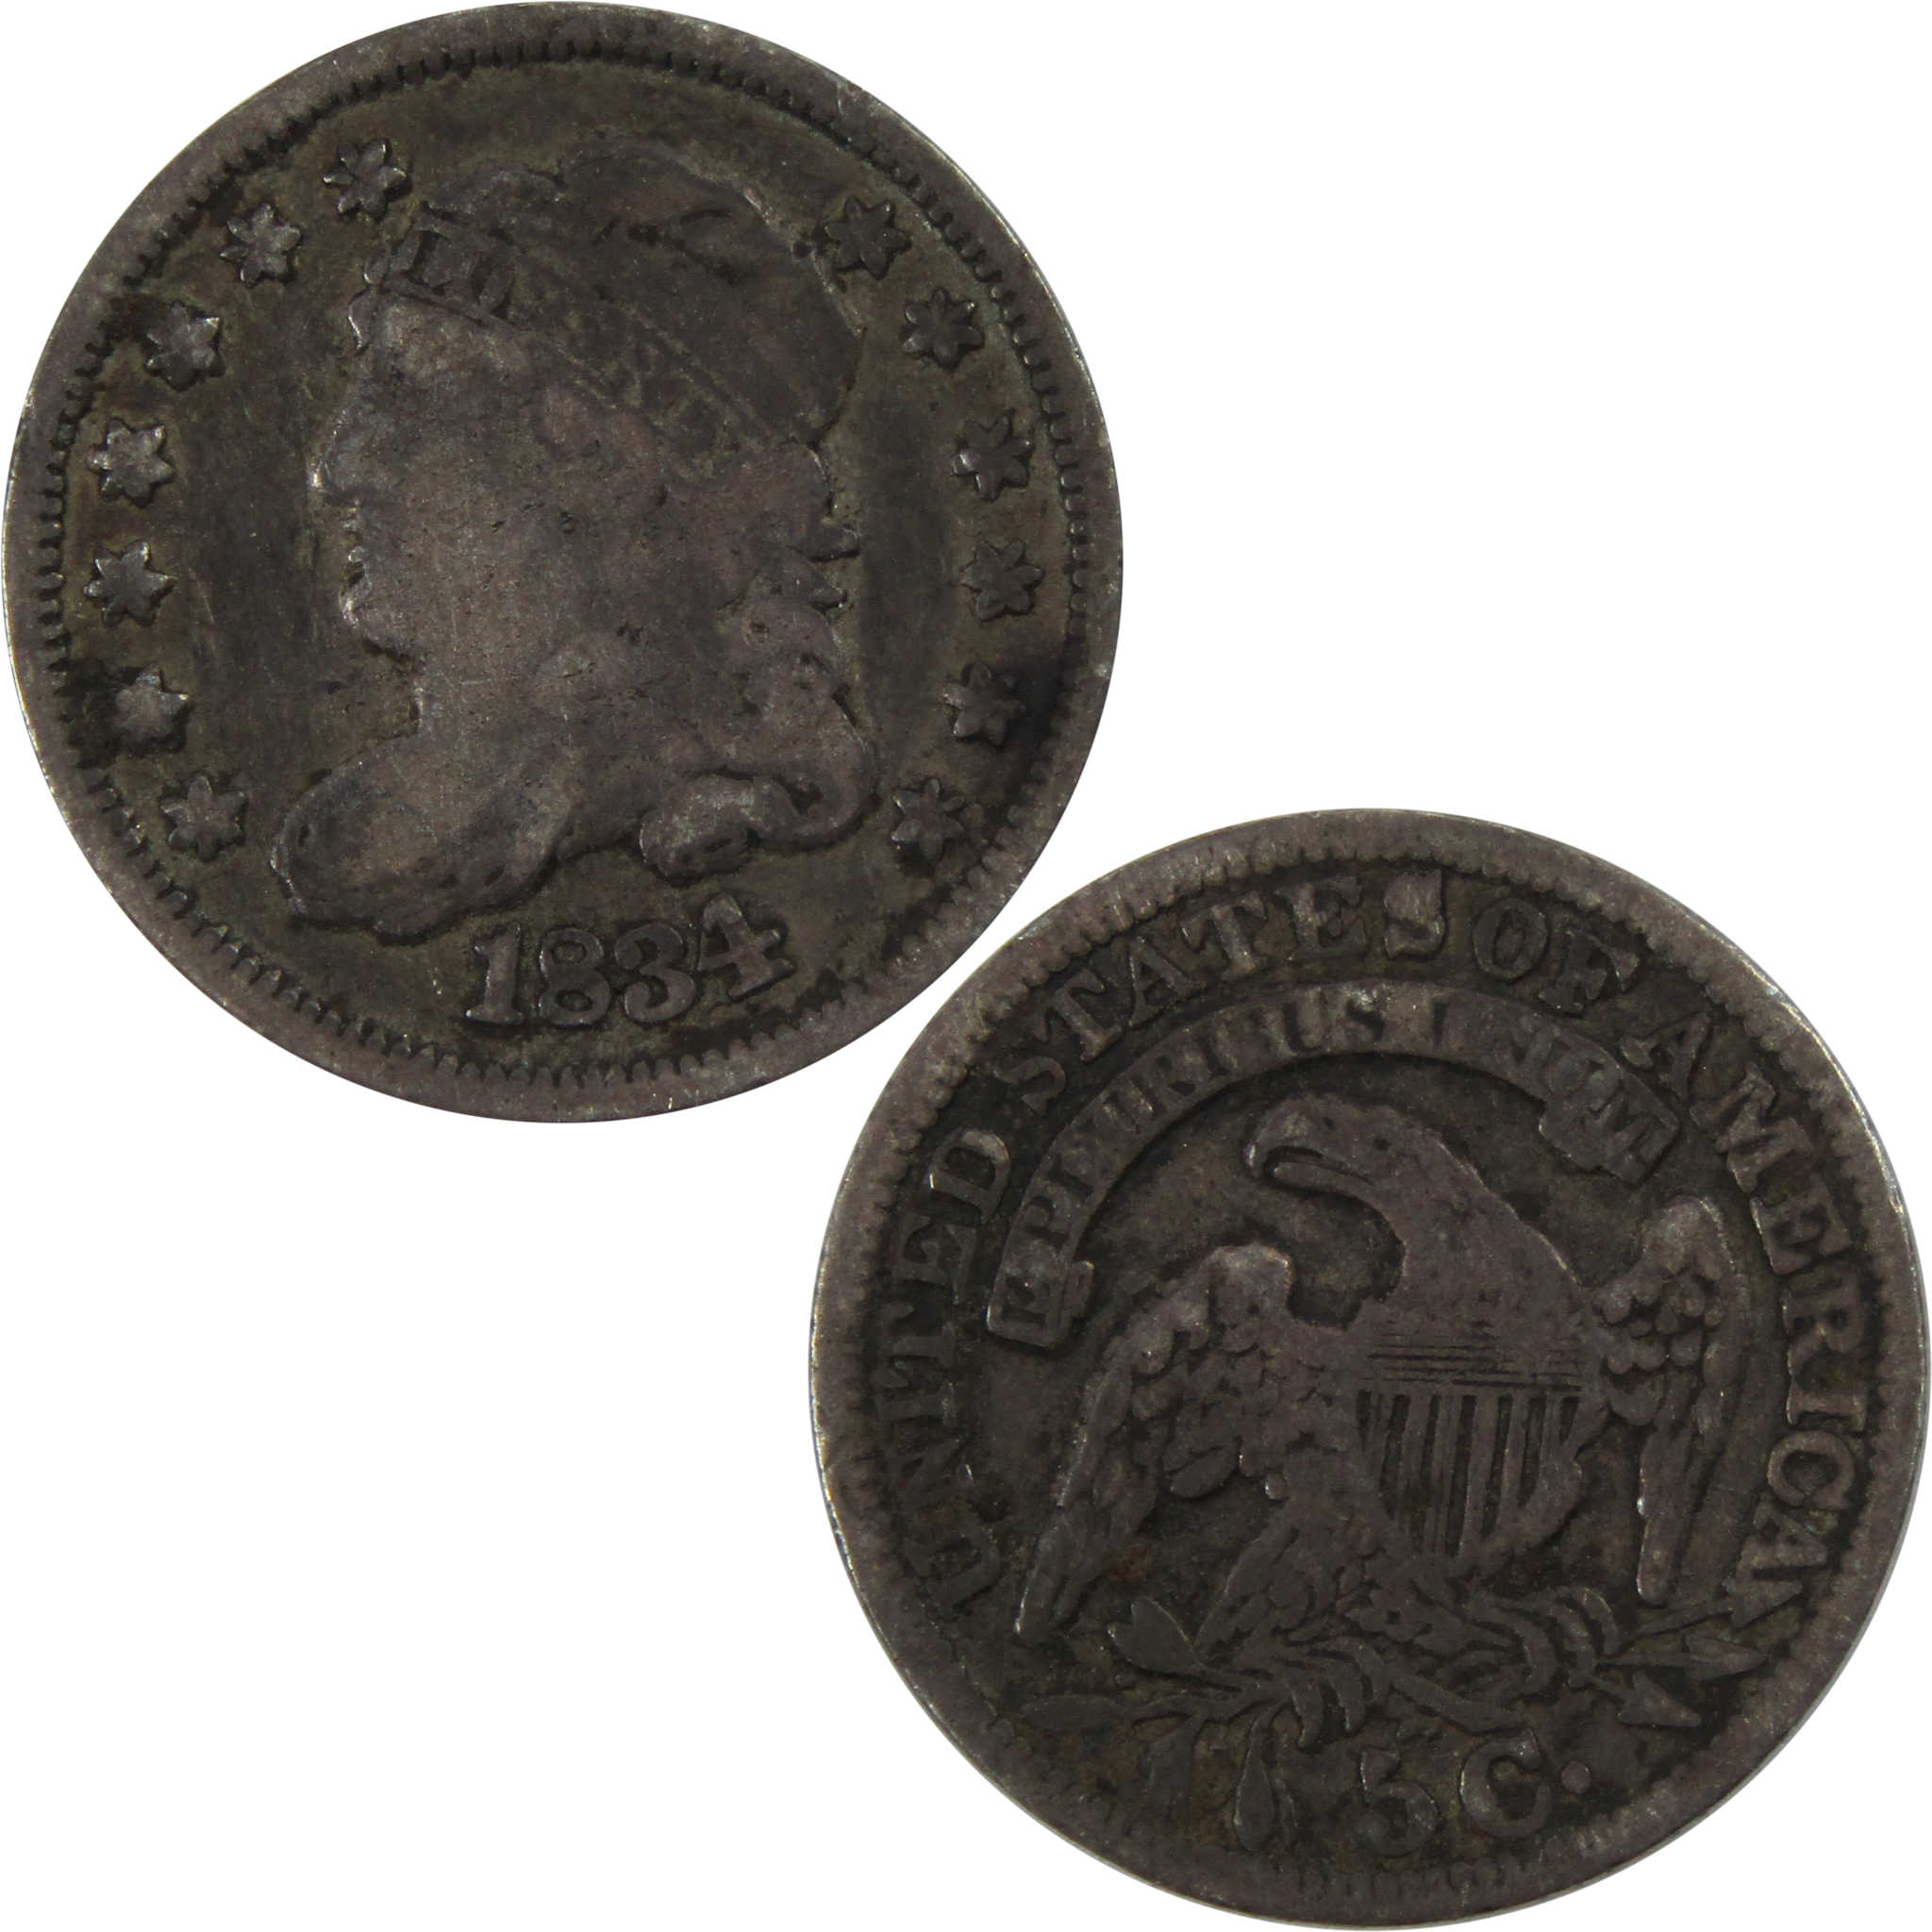 1834 Capped Bust Half Dime F Fine 89.24% Silver 5c Coin SKU:I7236